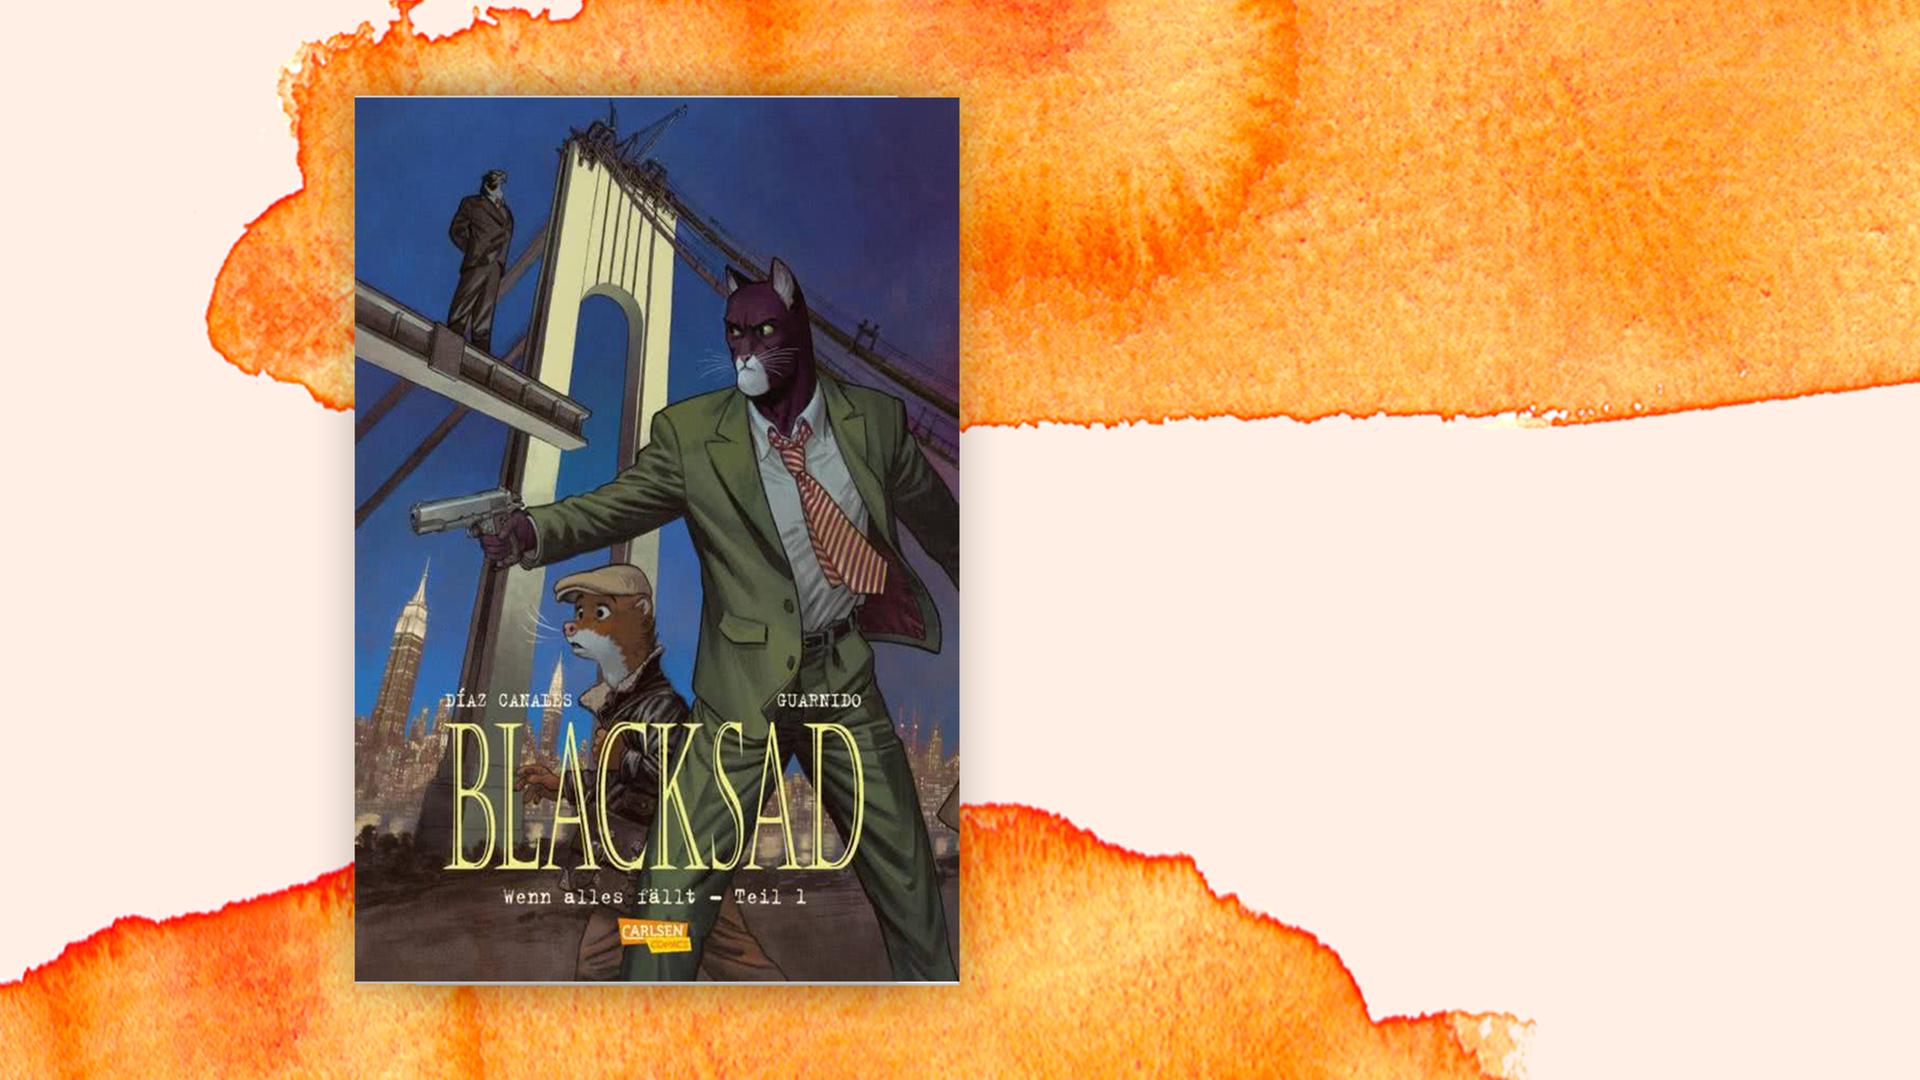 "Blacksad" Cover vor orangenem Hintergrund.